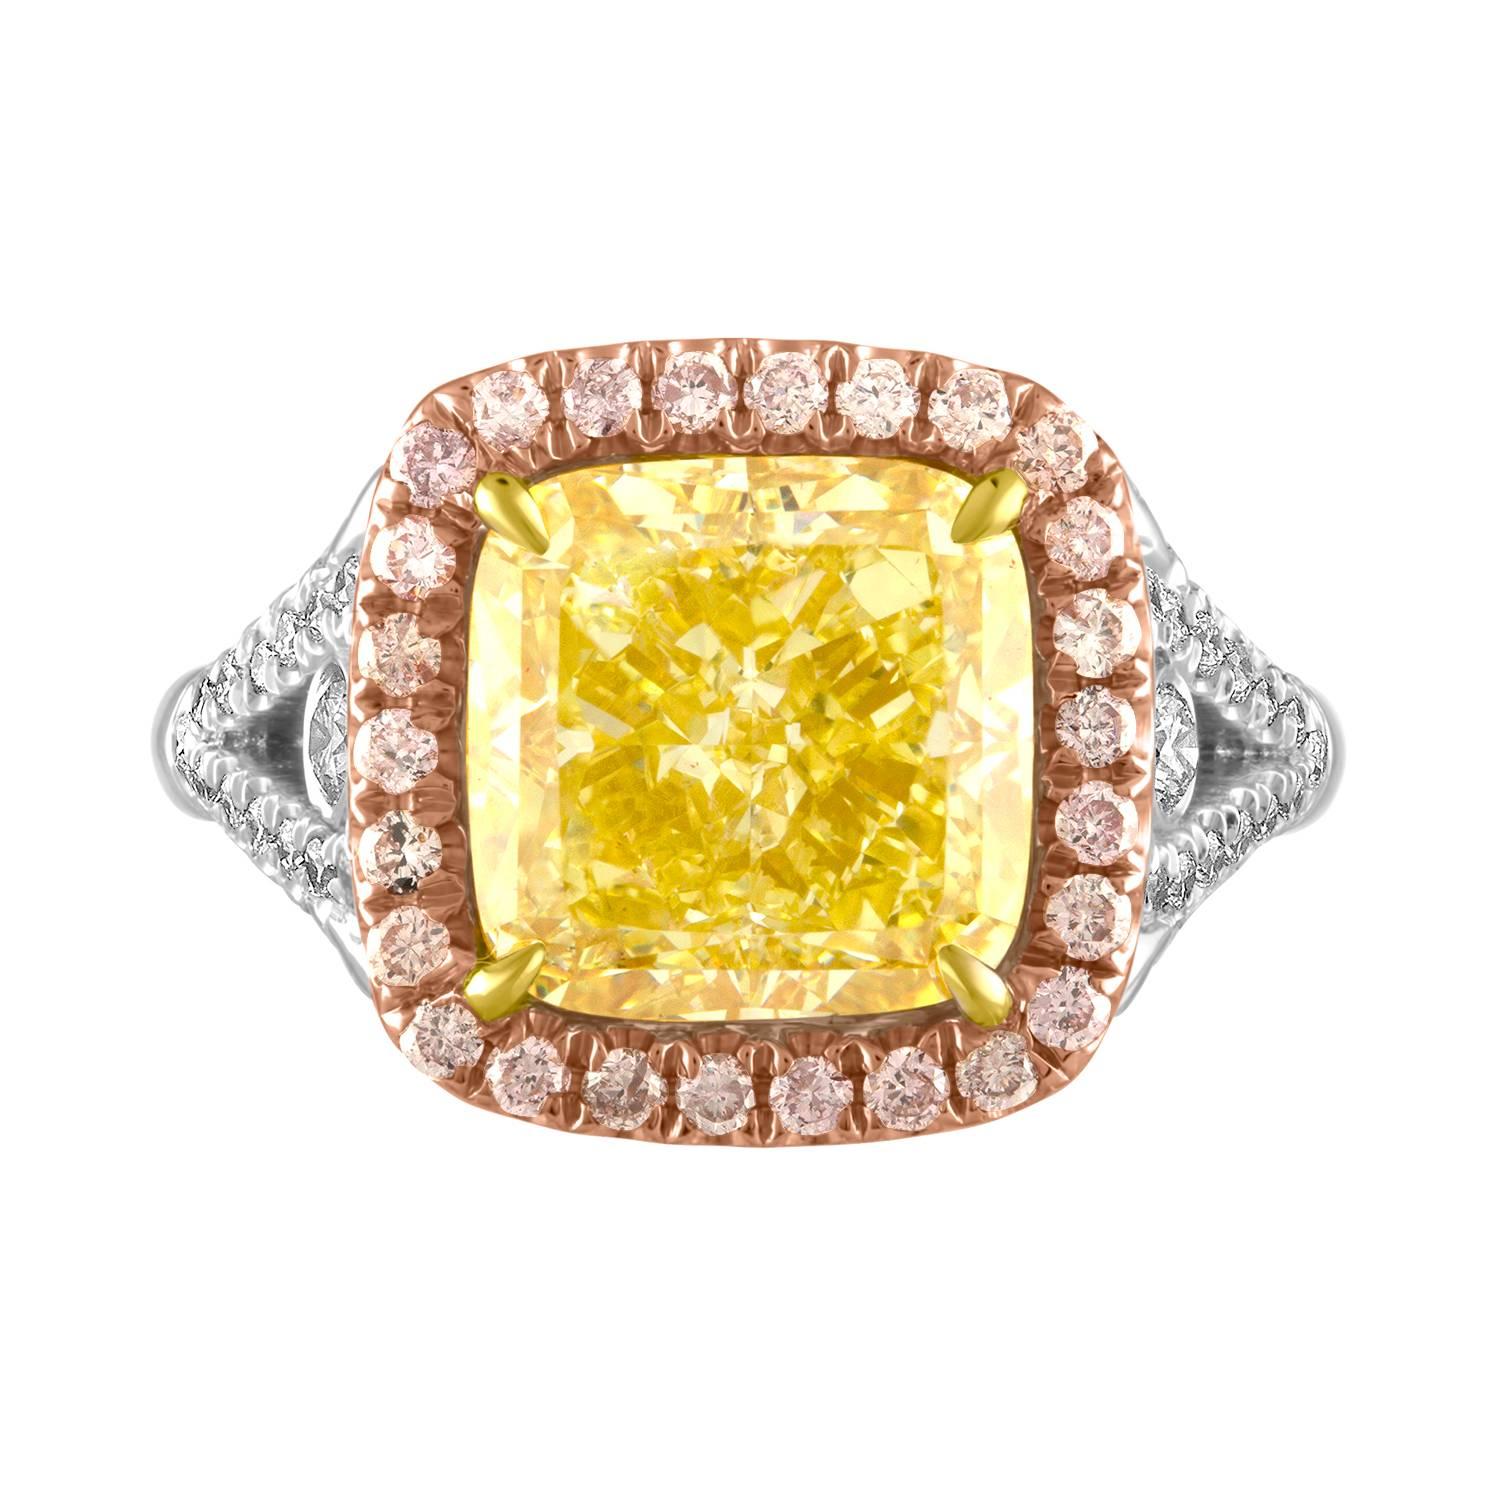 5.03 GIA Fancy Yellow Cushion Cut Diamond in Tri-Color Ring